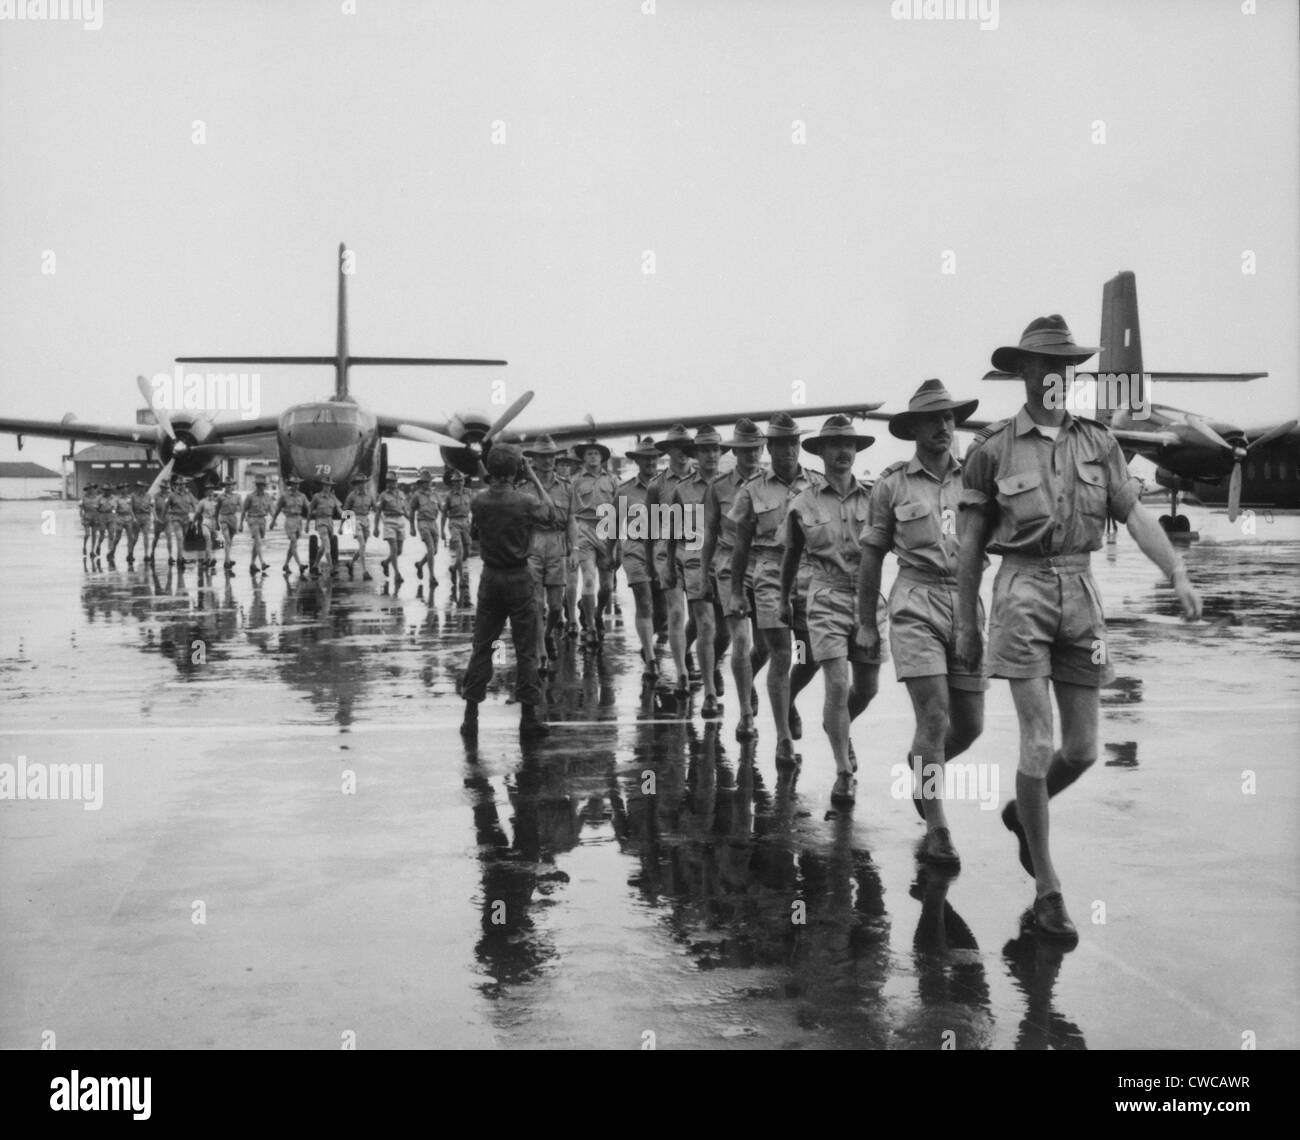 Royal Australian Air Force kommt am Flughafen Tan Son Nhut, Saigon, am 10. August 1964. Mehr als 60.000 Australien Soldaten kämpften im Stockfoto